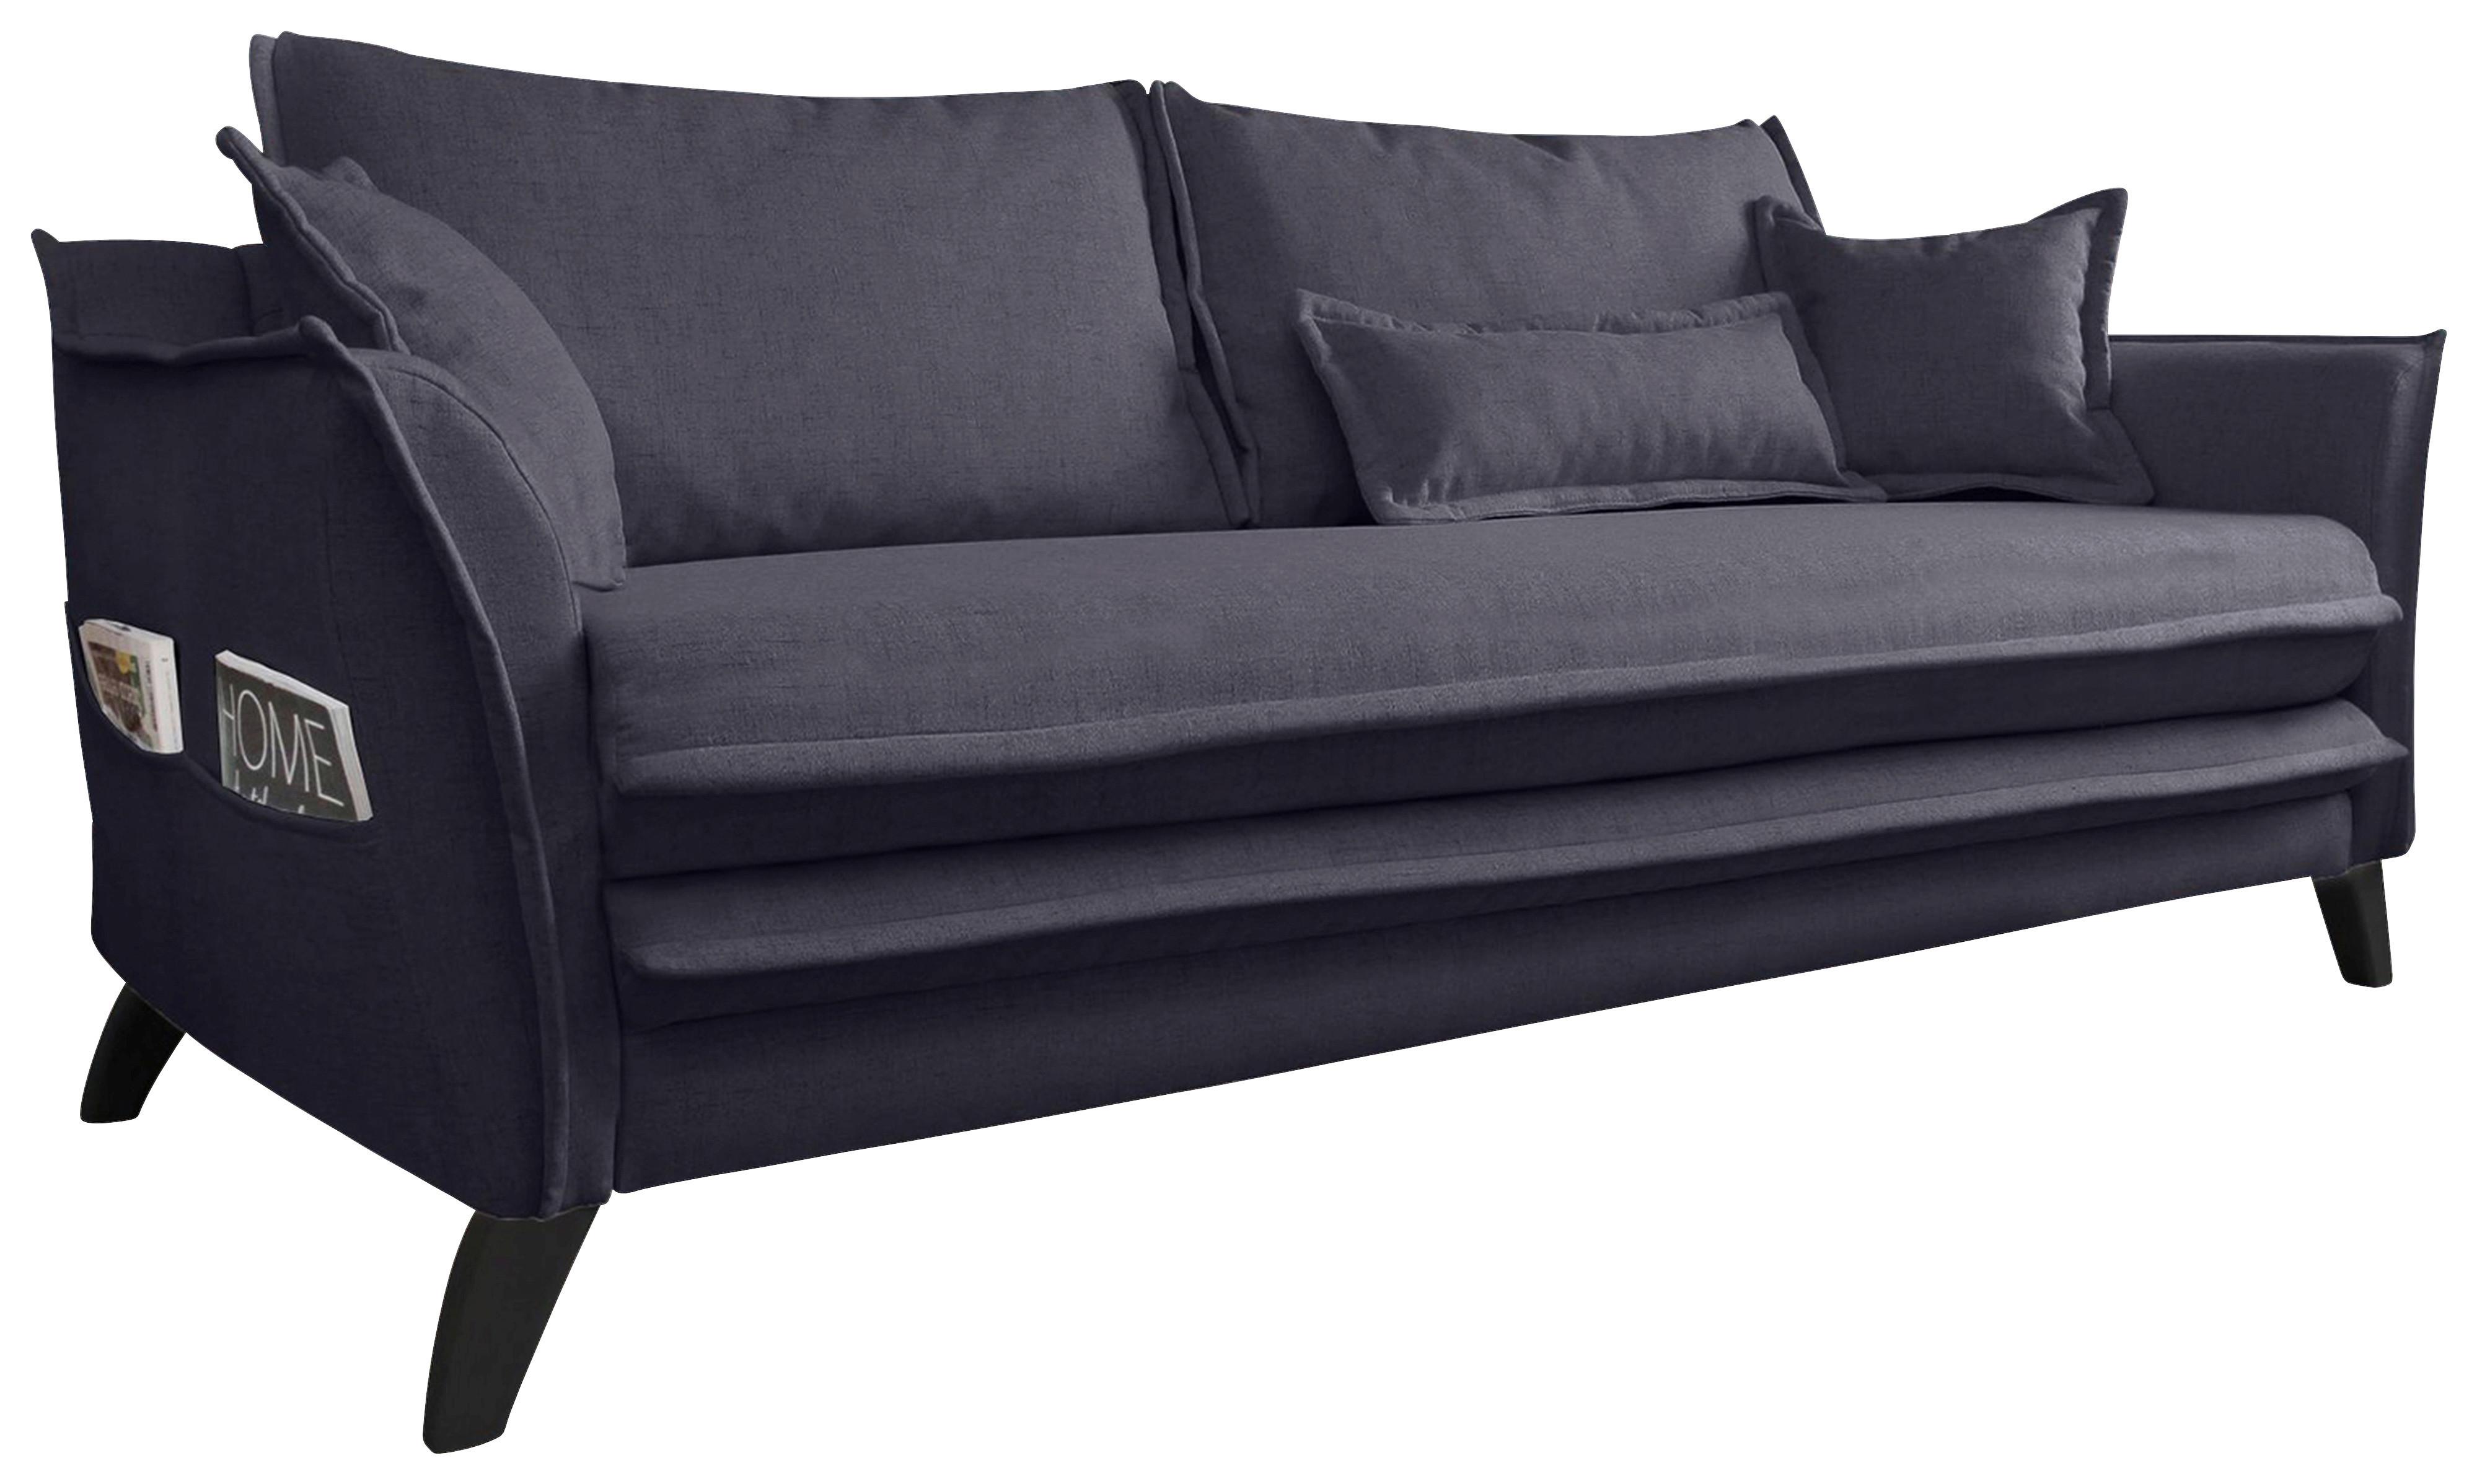 3-Sitzer-Sofa Charming Charlie mit Kissen Anthrazit - Anthrazit/Schwarz, Basics, Textil (180/85/90cm) - MID.YOU